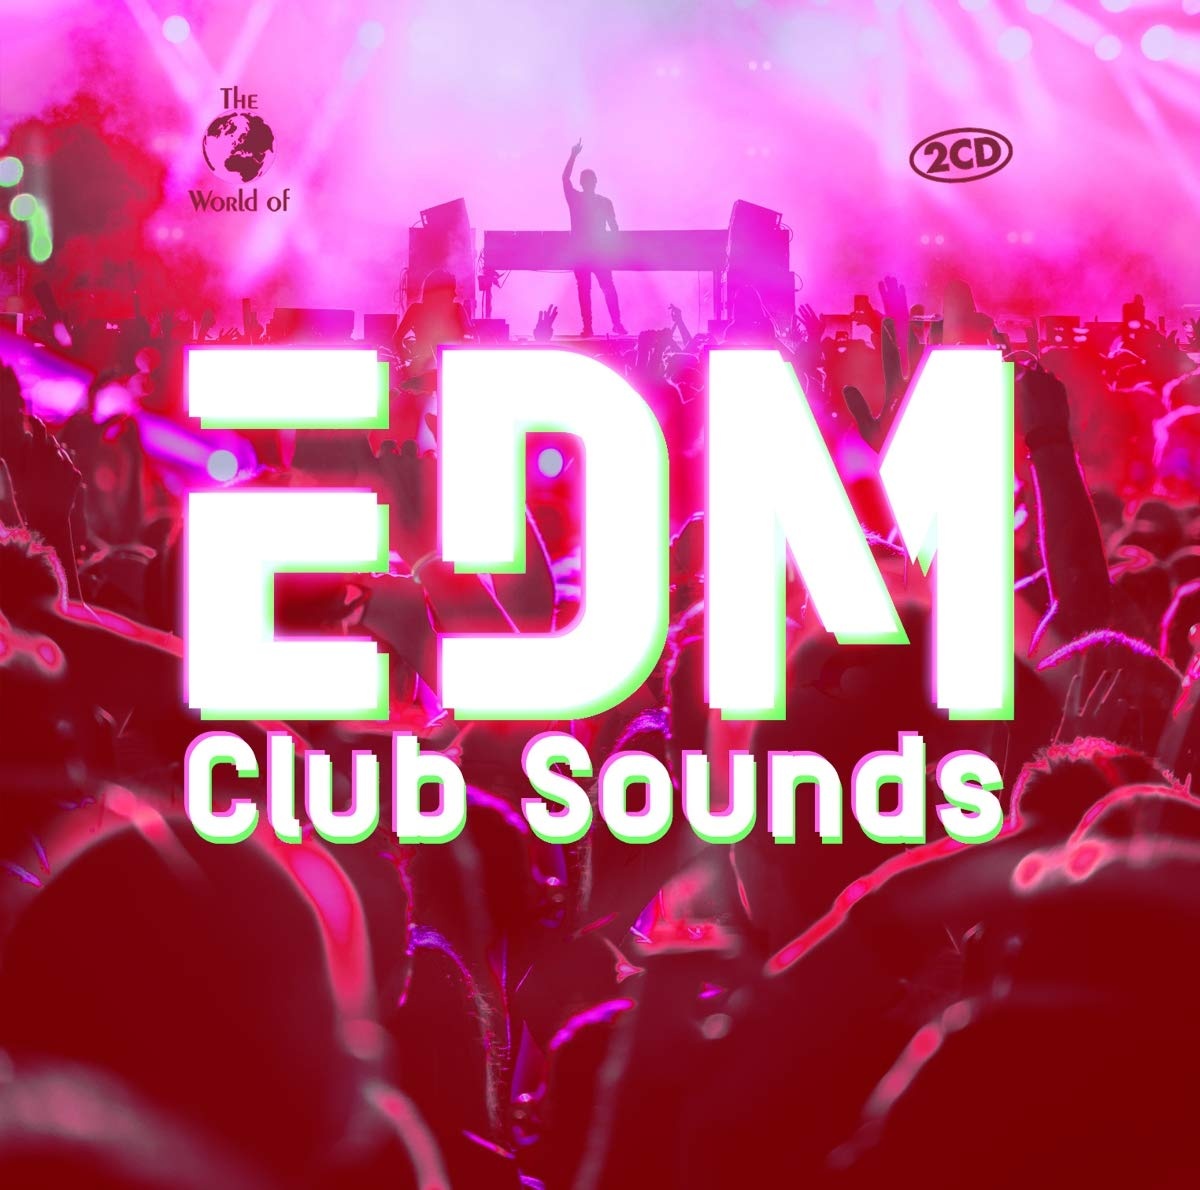 Club Sounds CD. EDM Club. Club Sounds надпись. Club Sounds CD обложки. Sounds 2.0